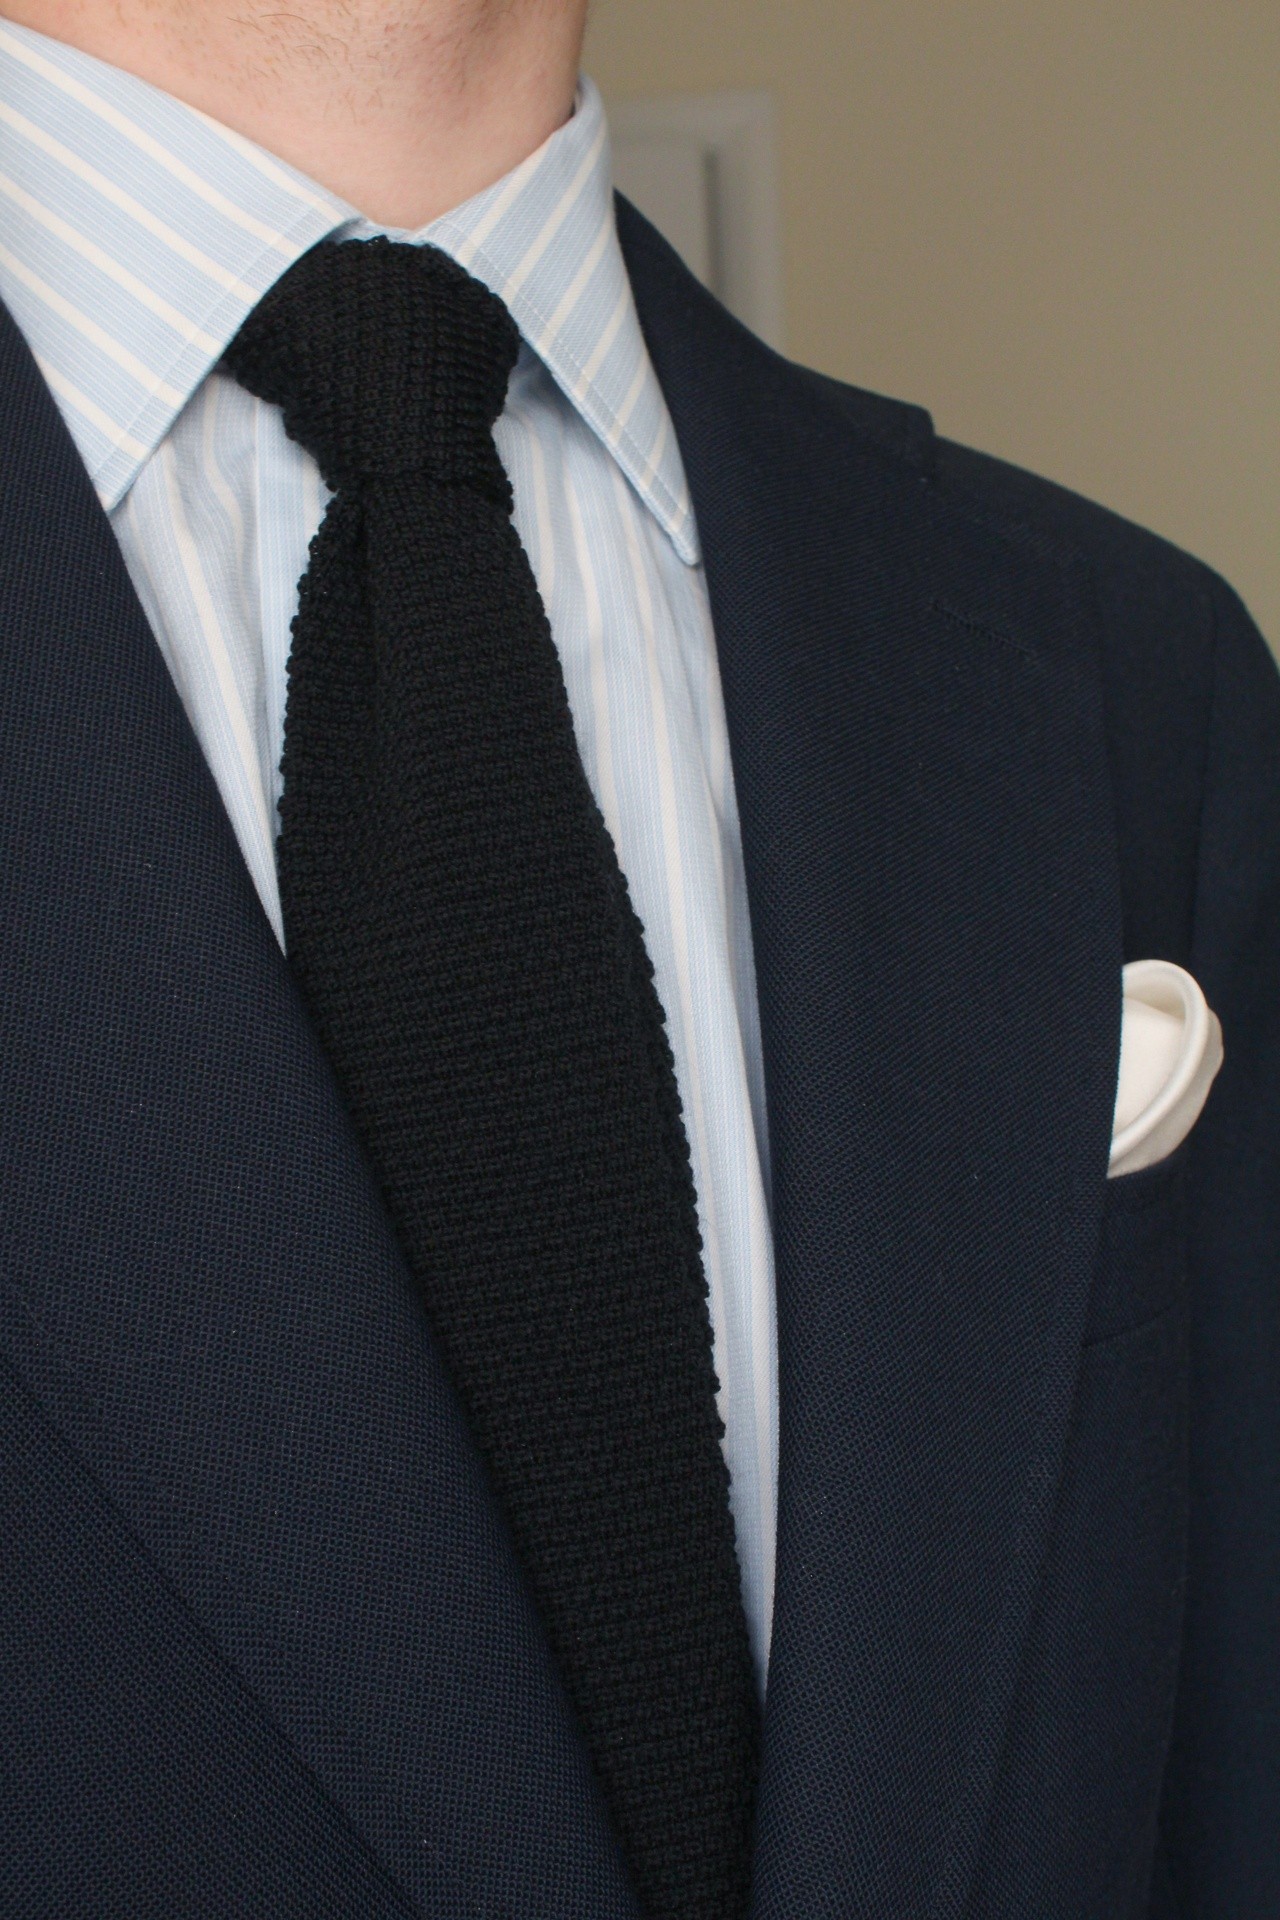 Versatility of Black Knit Tie? | Styleforum